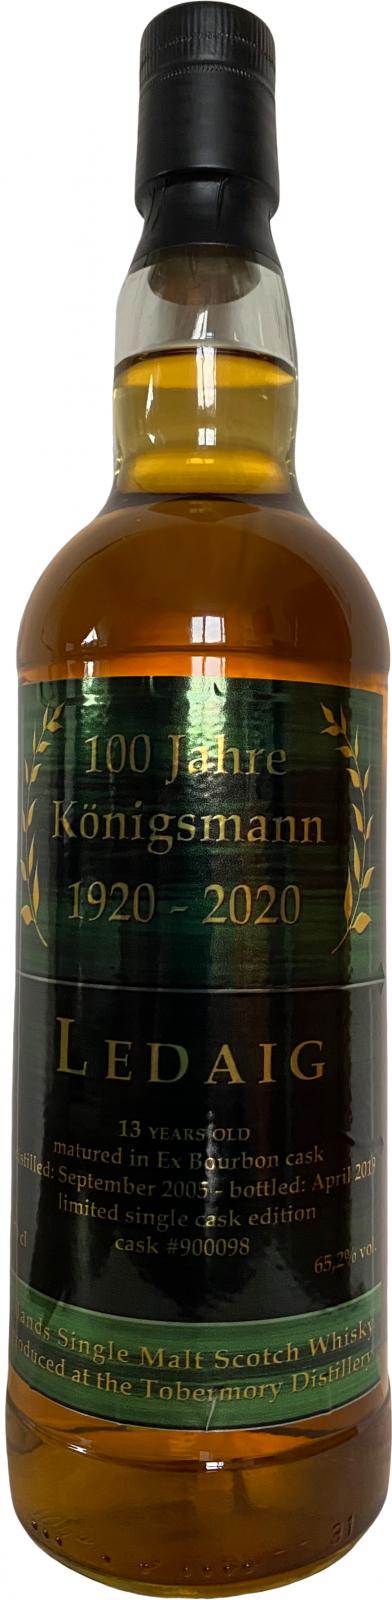 Ledaig 2005 Km 100 years Konigsmann 1920-2020 Bourbon Cask #9000098 65.2% 700ml